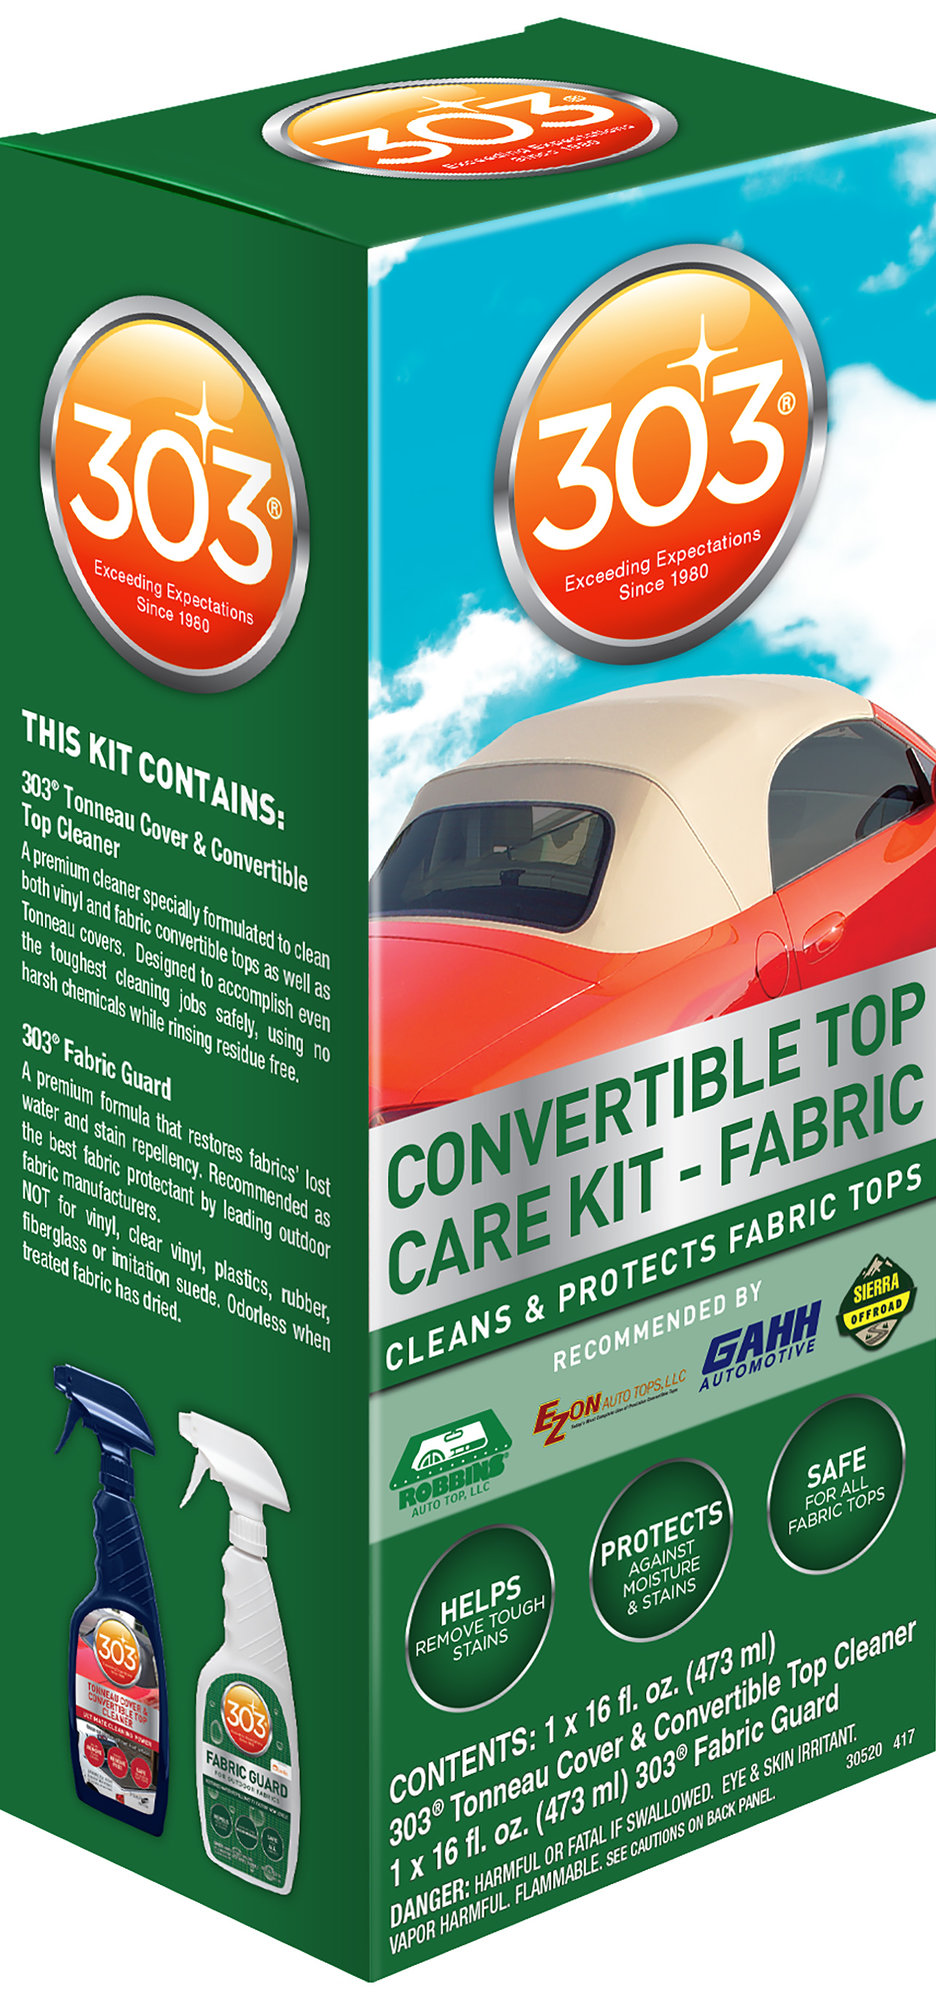 303 Fabric Convertible Top & Care Kit